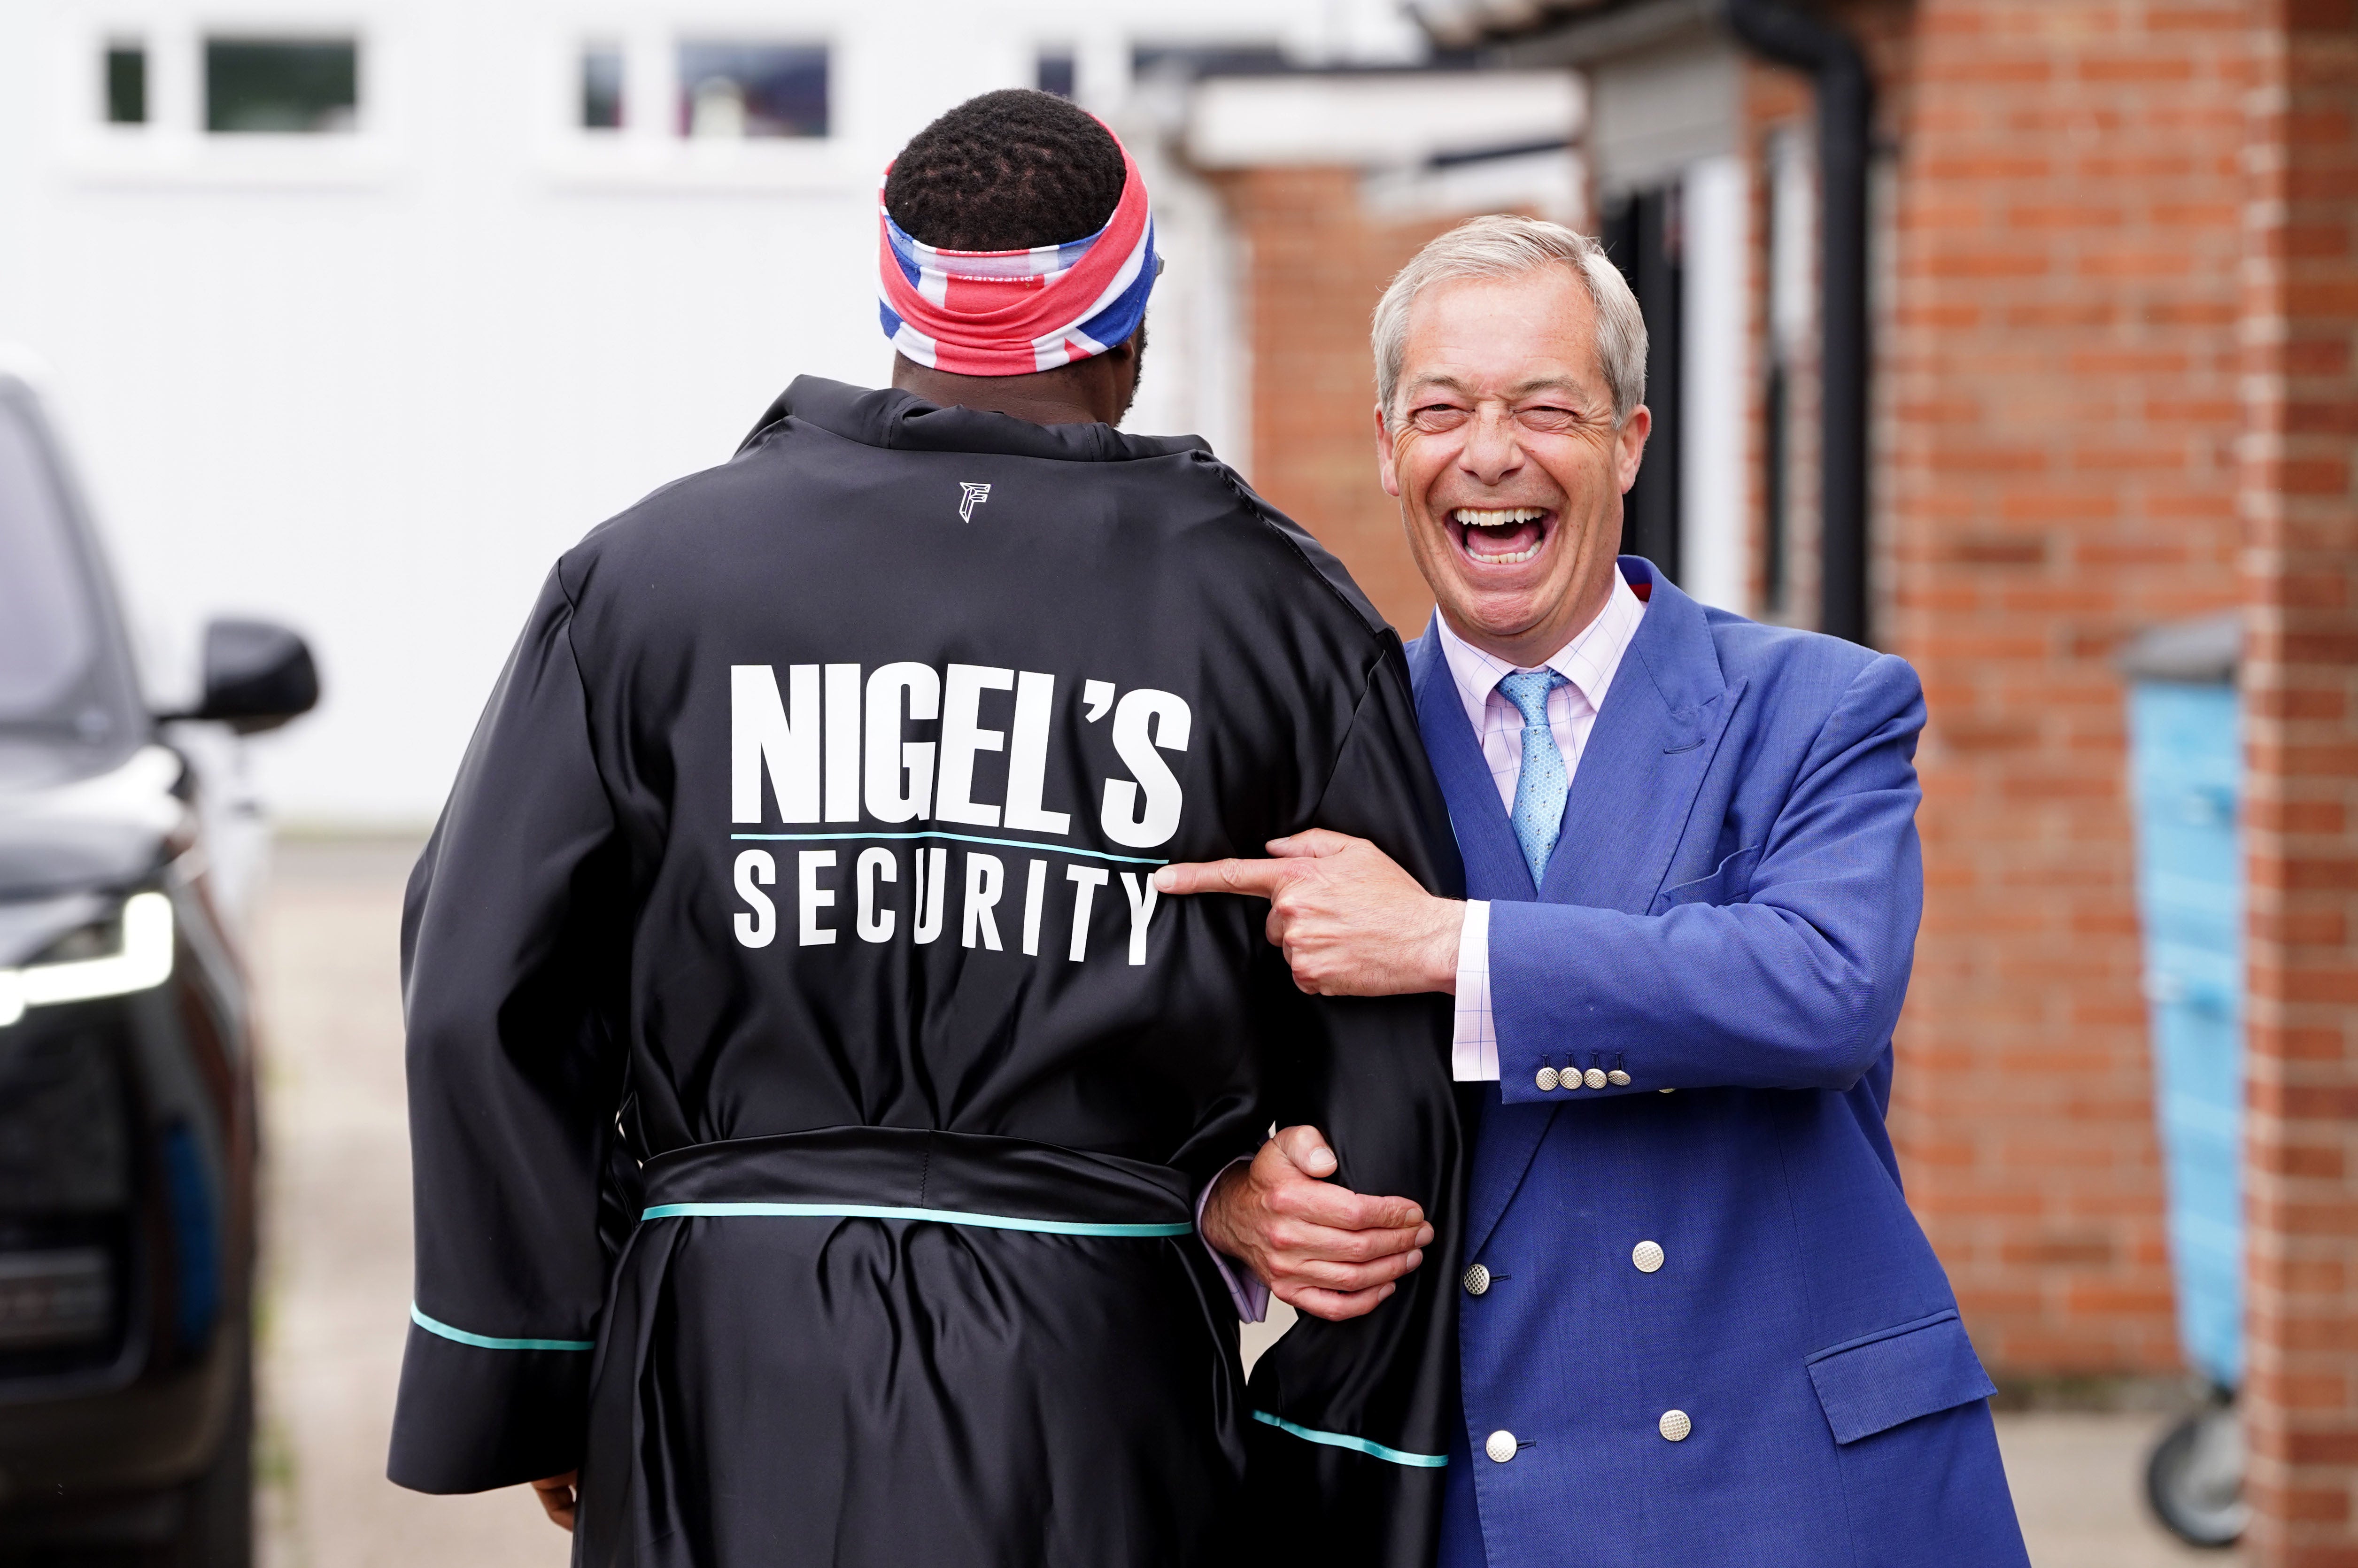 Reform UK leader Nigel Farage and boxer Derek Chisora (Ian West/PA)